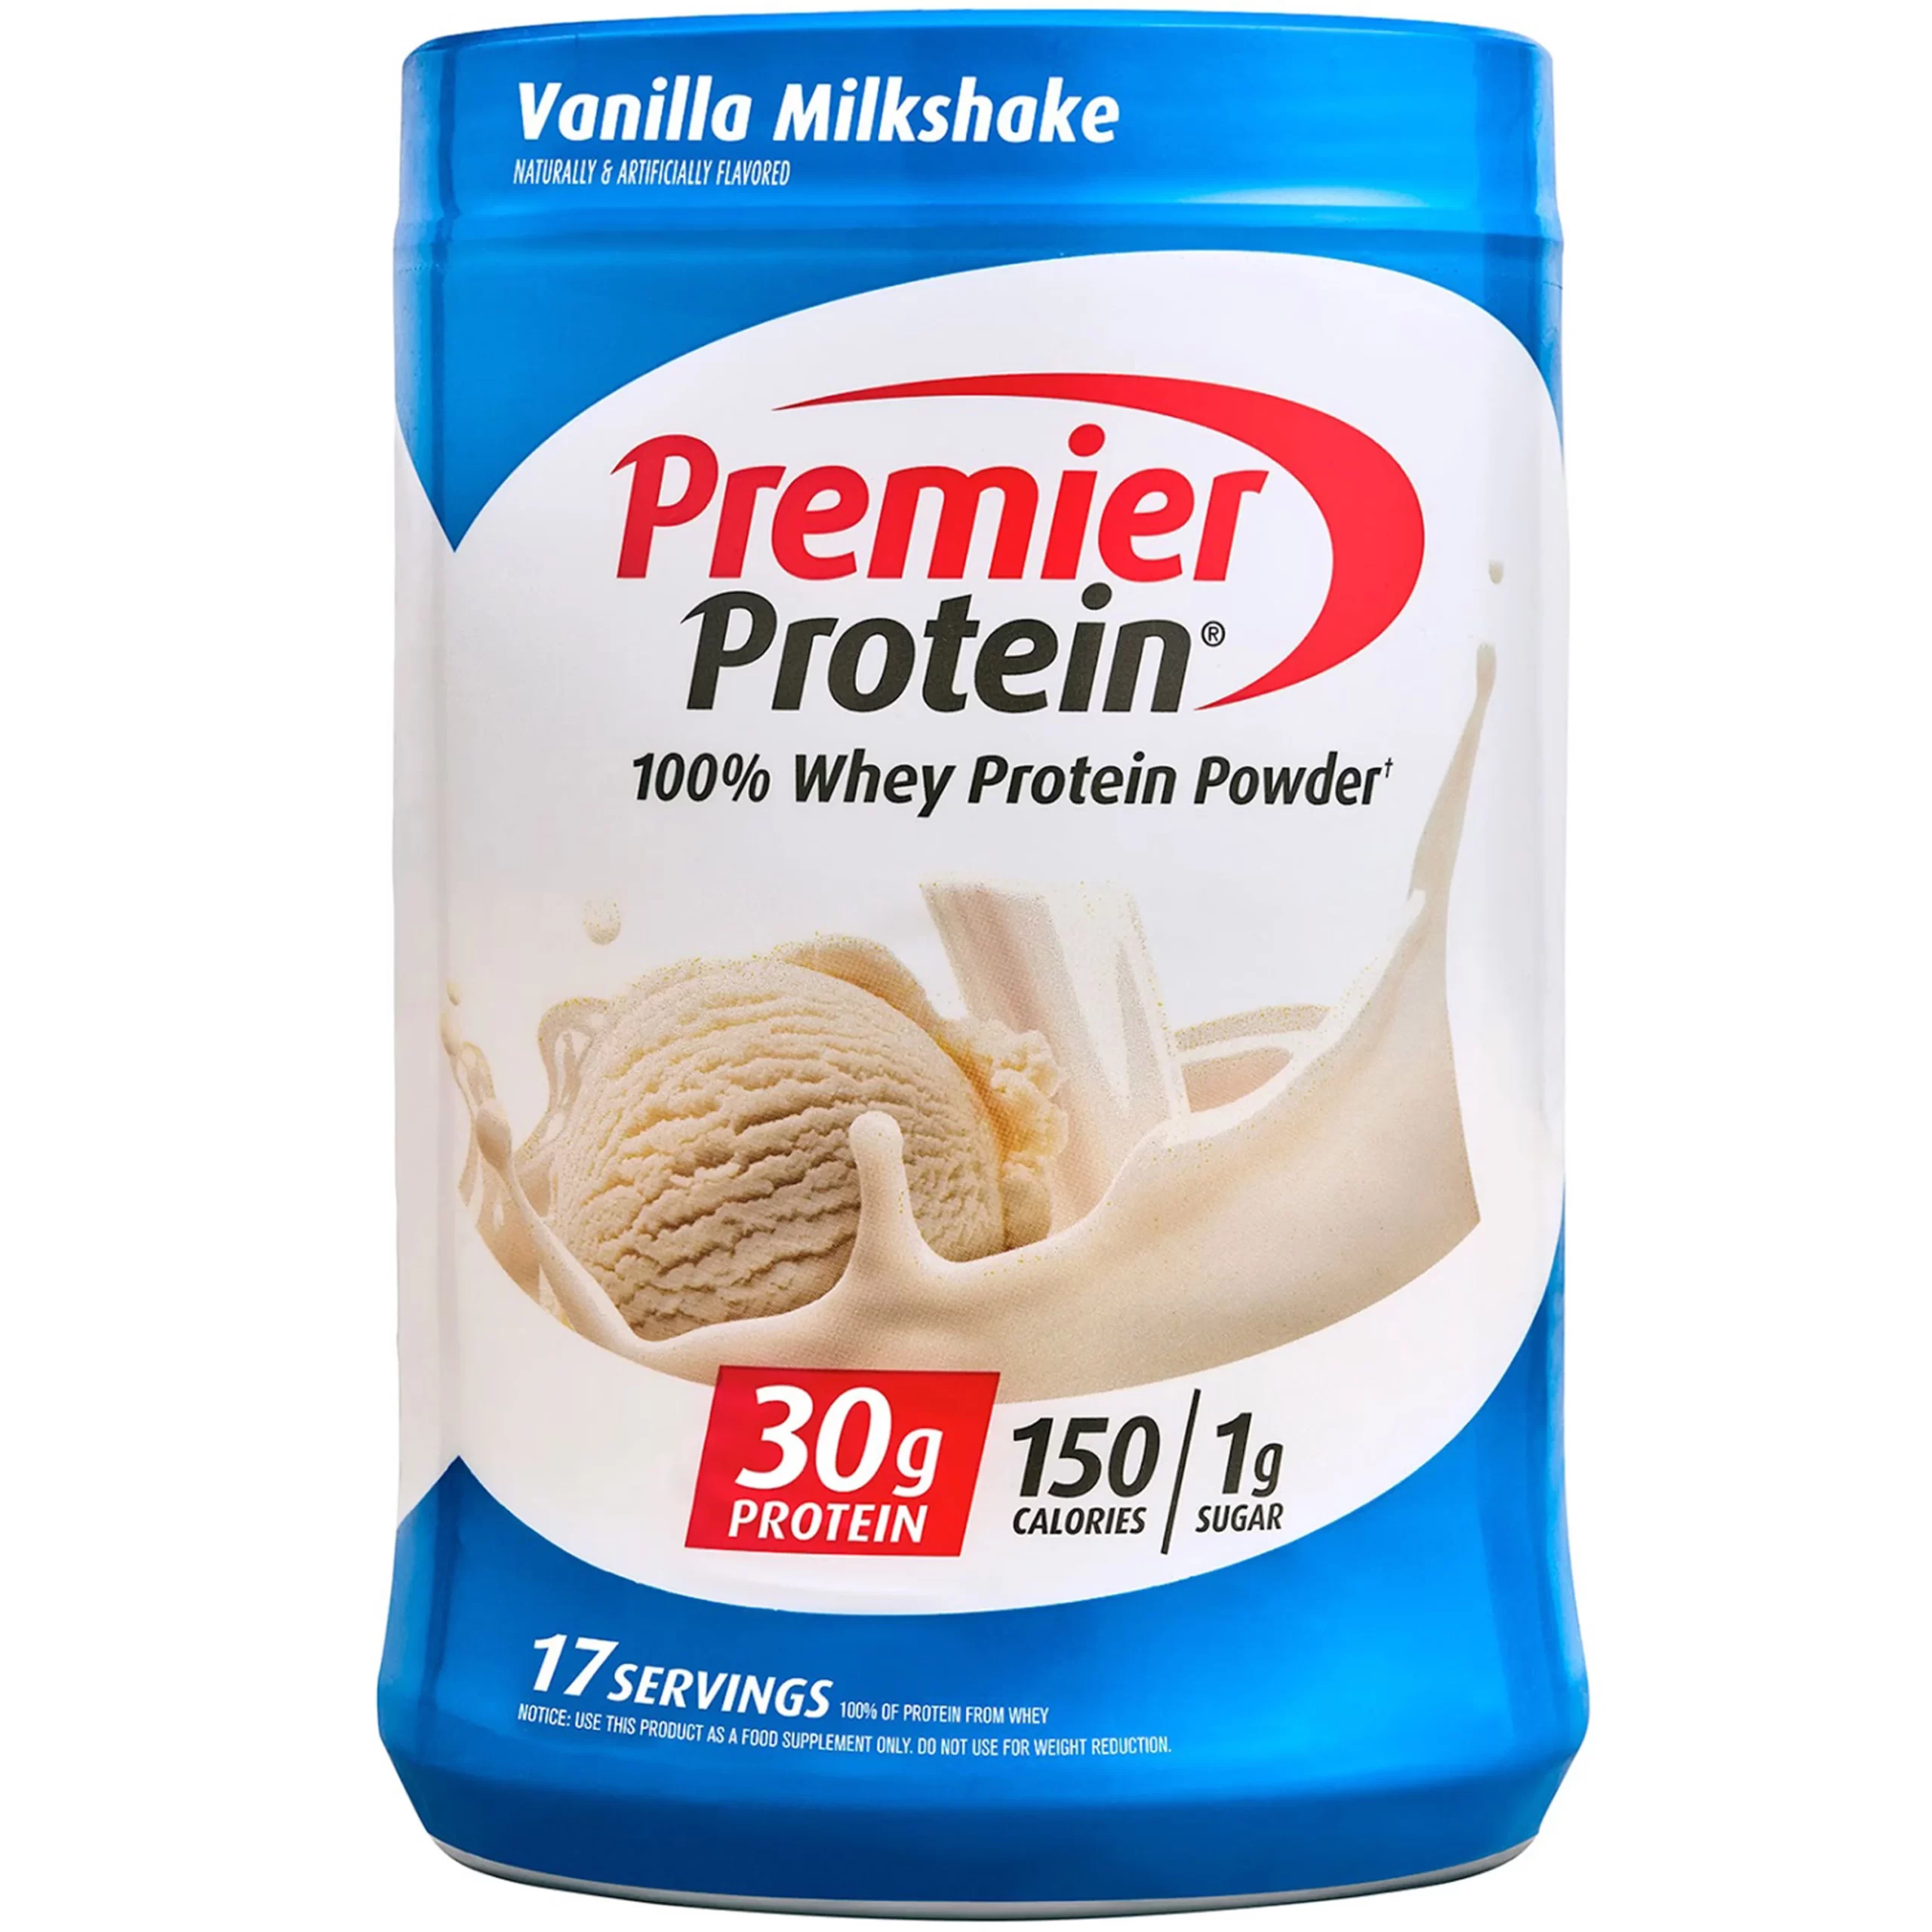 Premier Protein 100% Whey Protein Powder, Vanilla Milkshake, 30g Protein, 24.5 Oz, 1.5 Lb